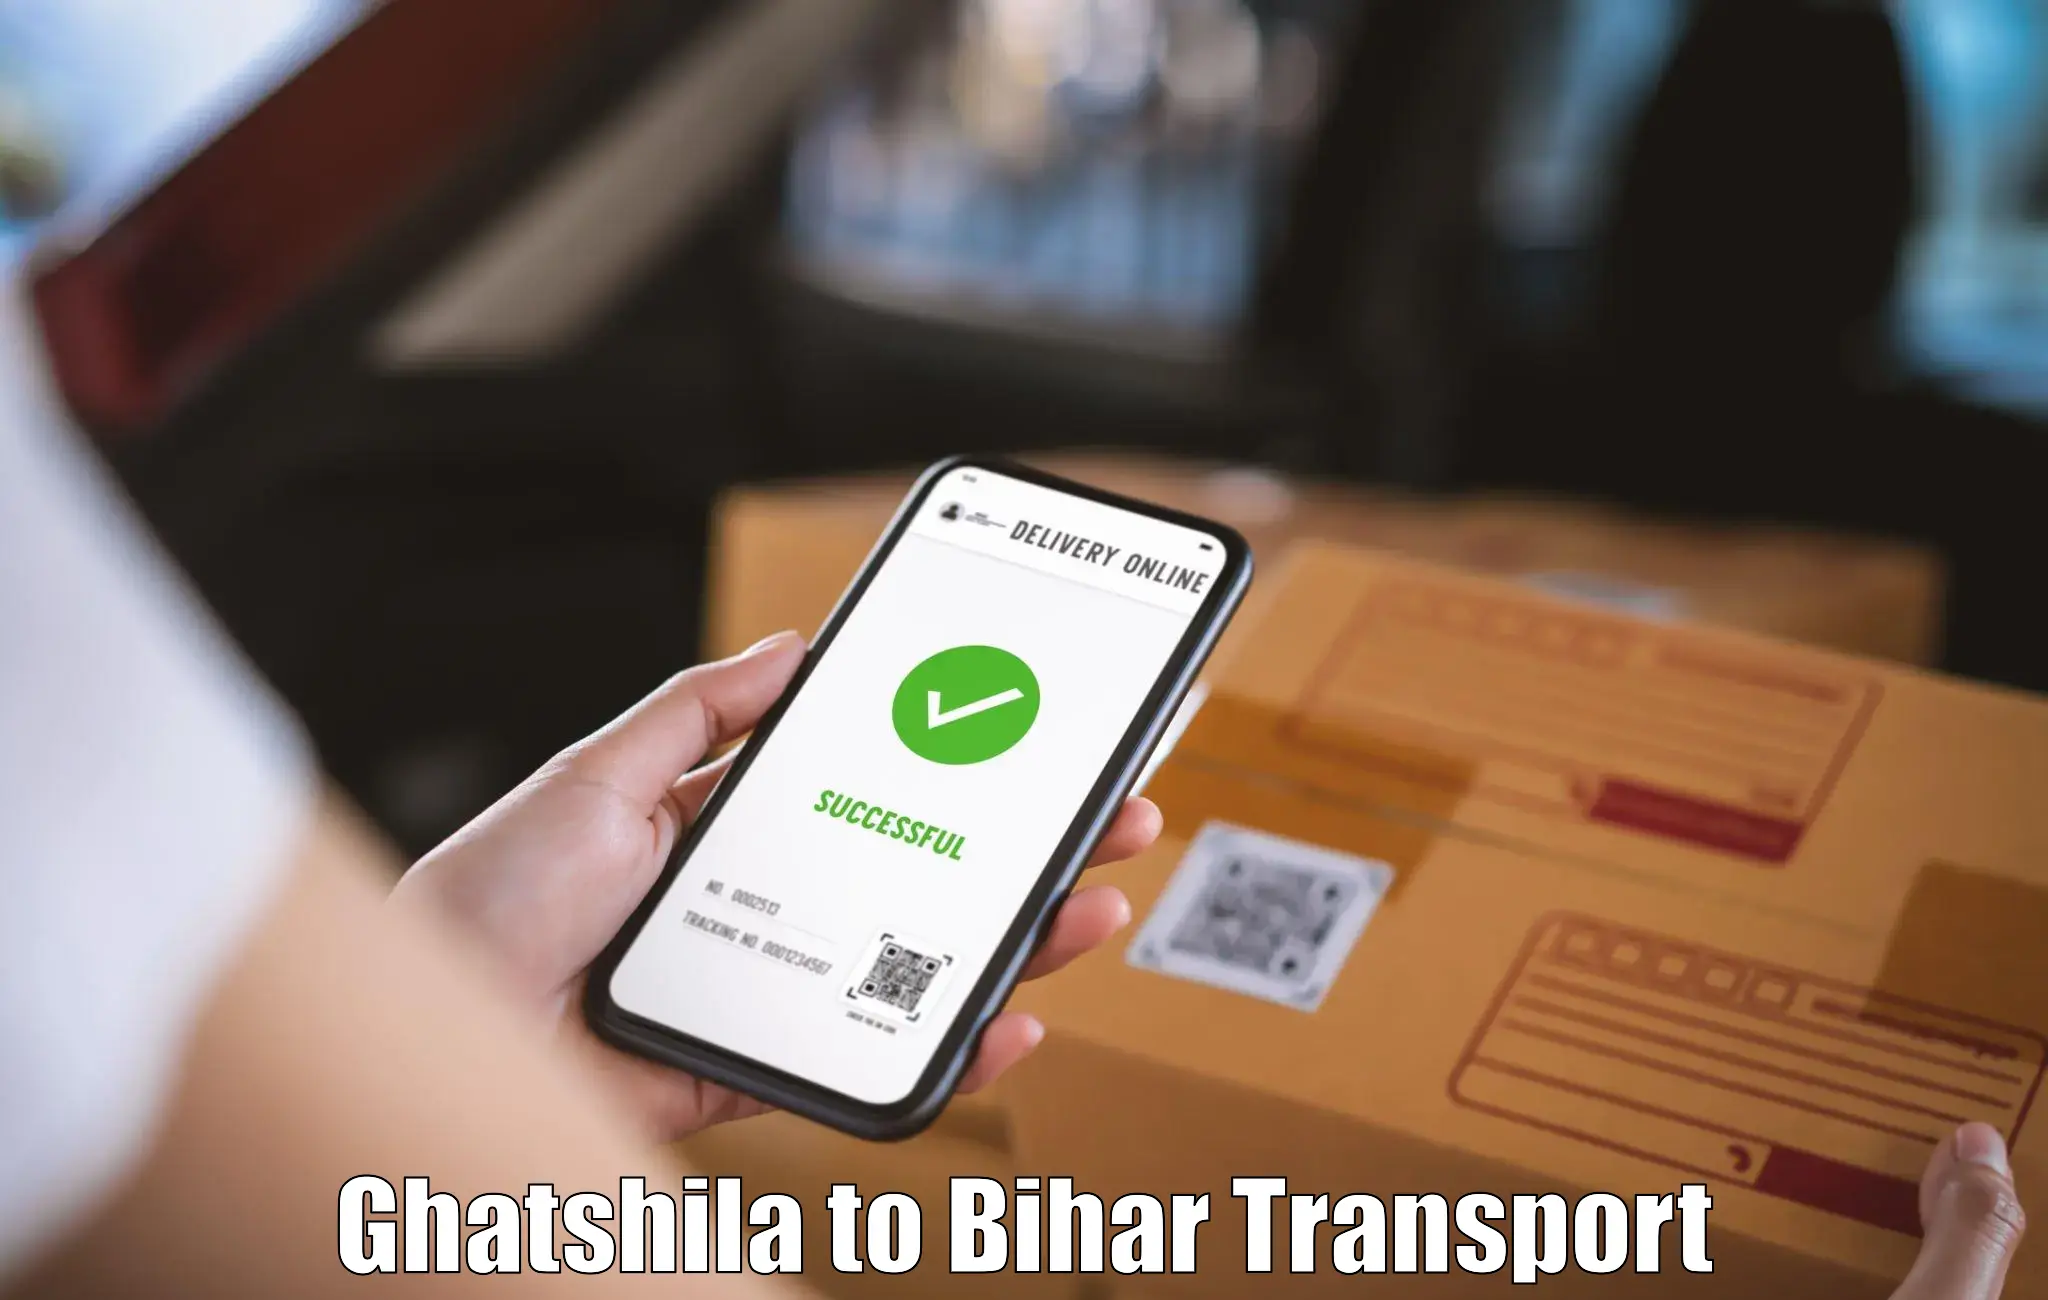 Transport in sharing Ghatshila to Fatwah